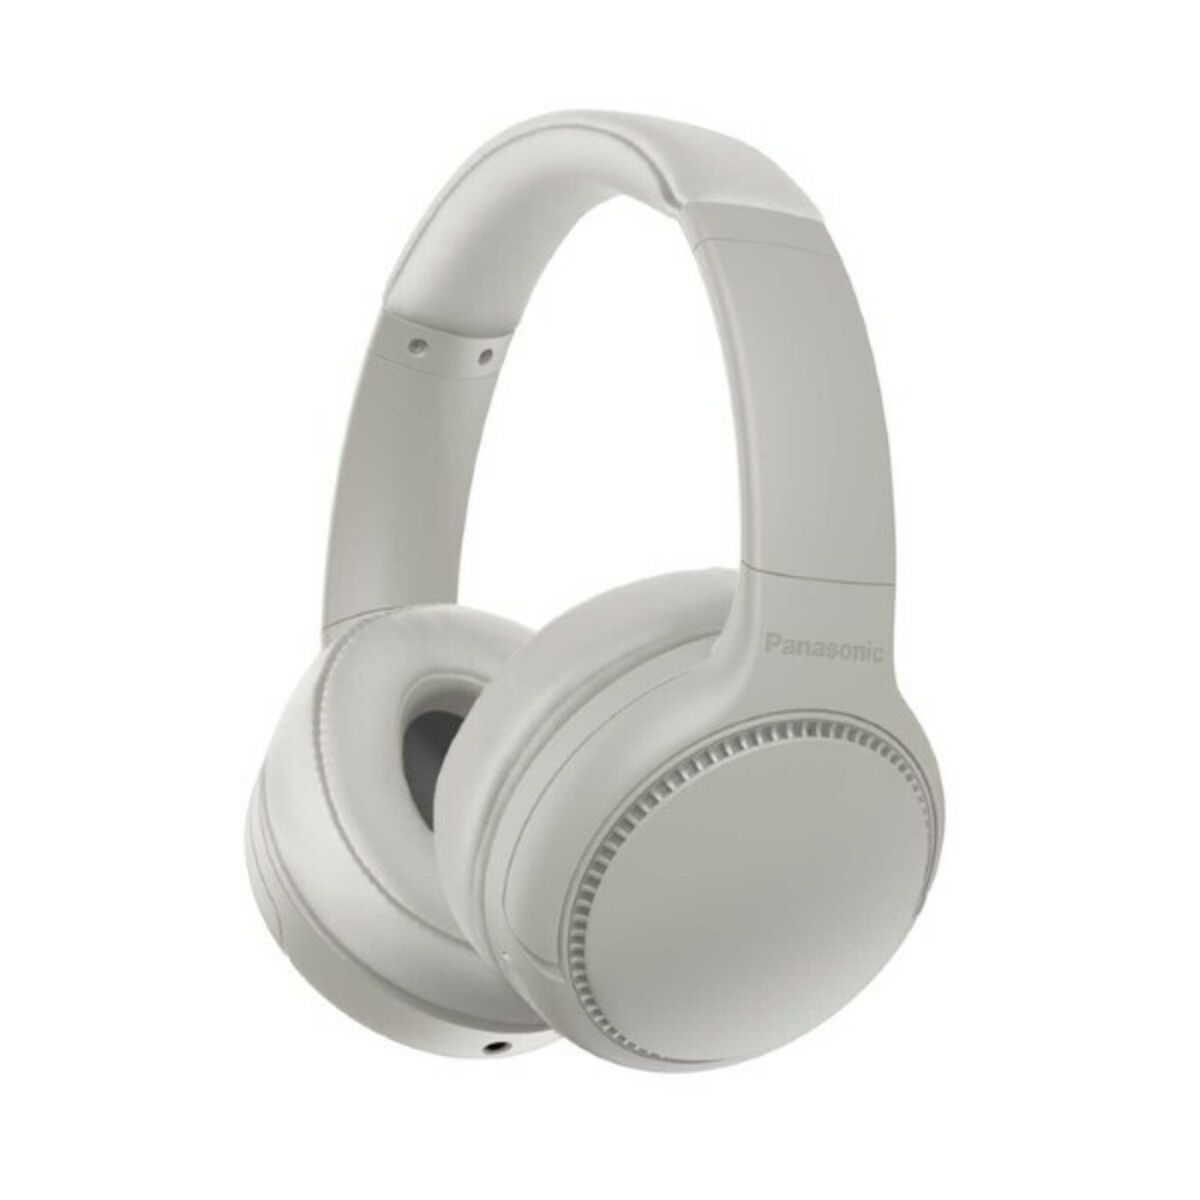 Wireless Headphones Panasonic Corp. RB-M700B Bluetooth White - Generation Gamer